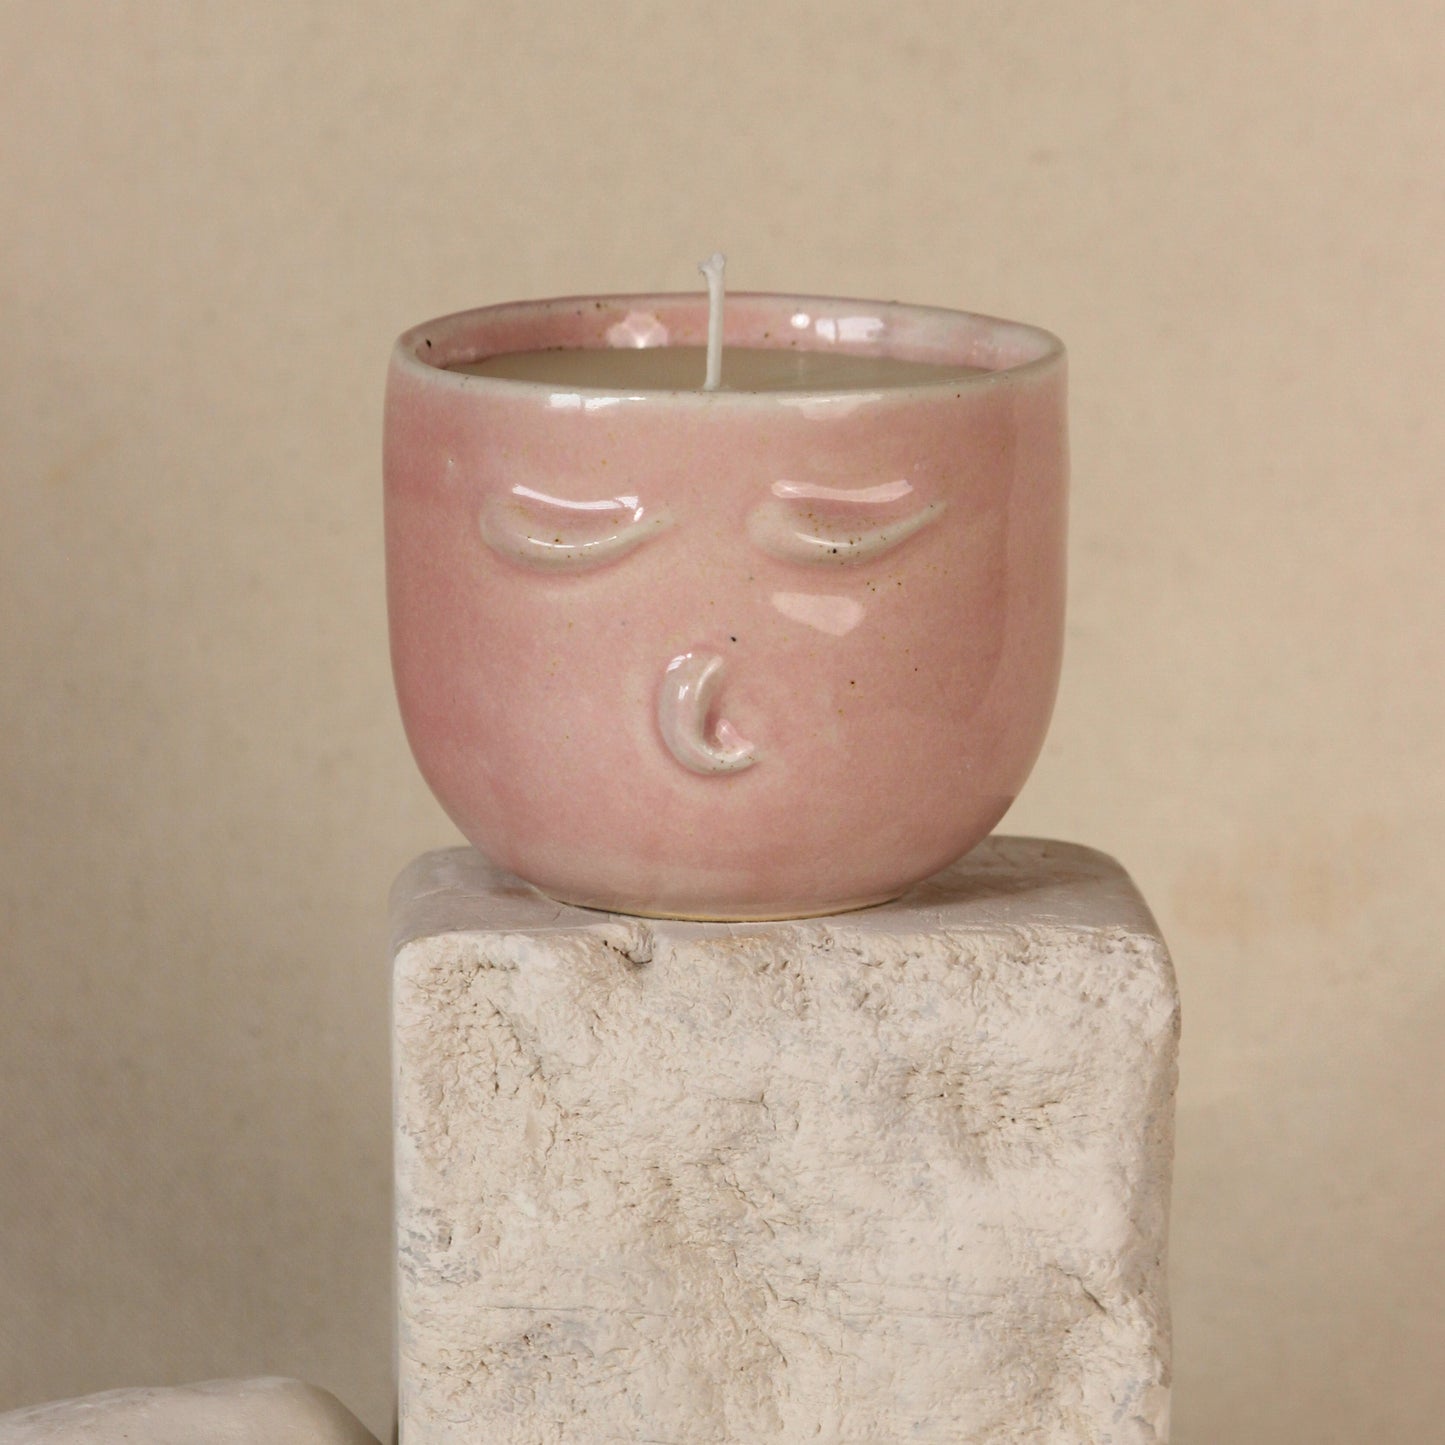 The Priest Face Ceramic Jar Candle - Pink color